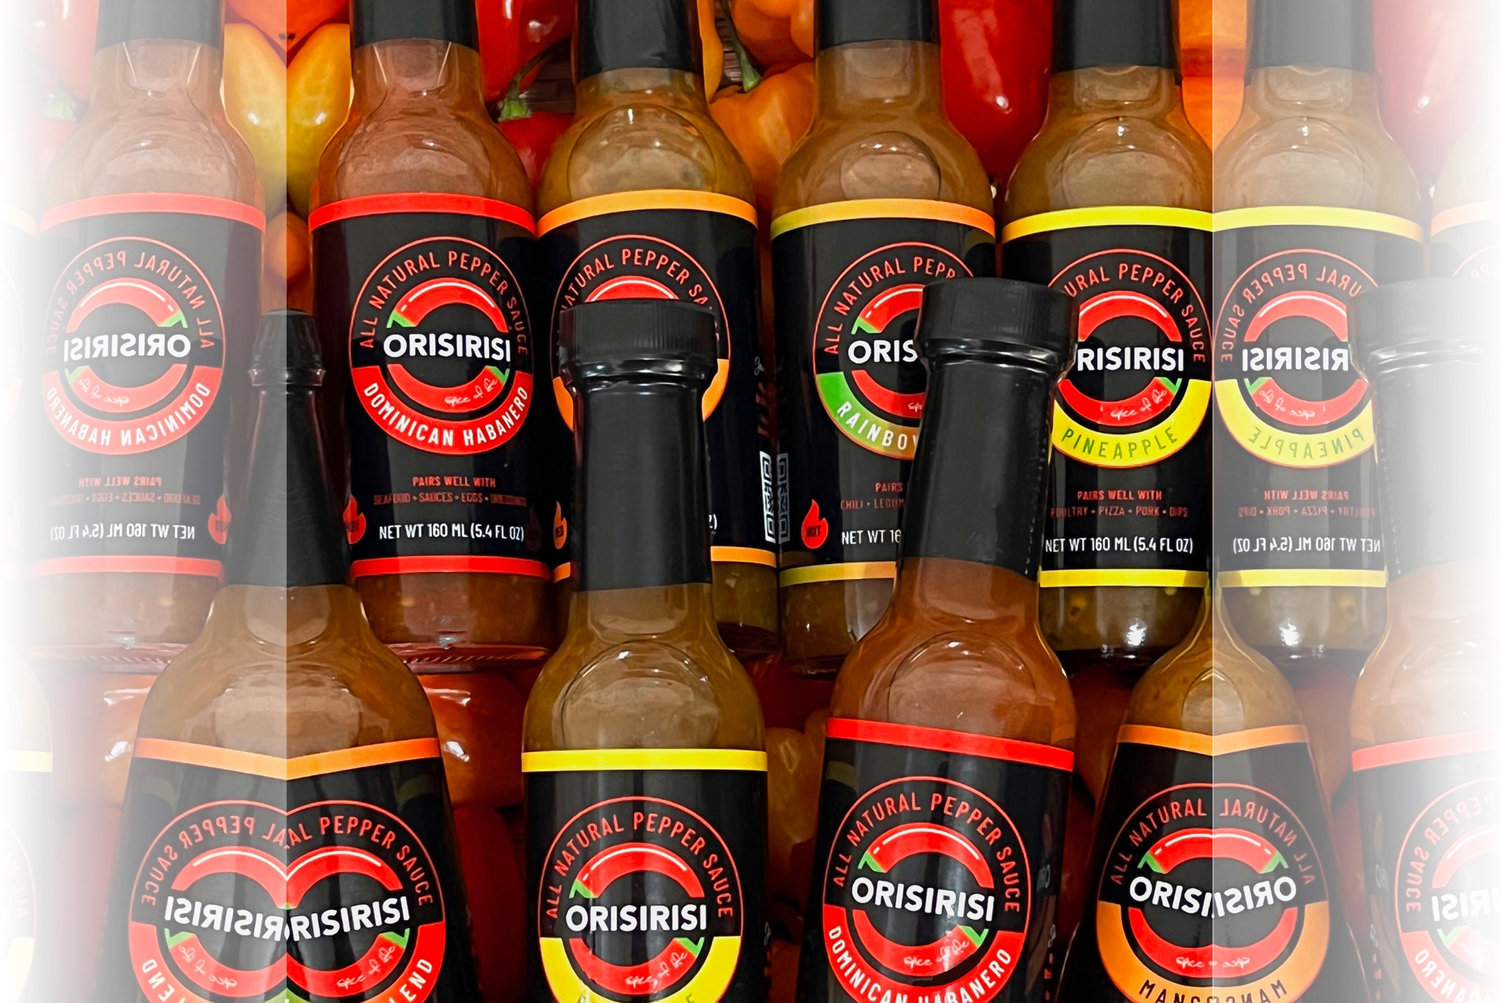 Orisirisi’s current range of pepper sauces